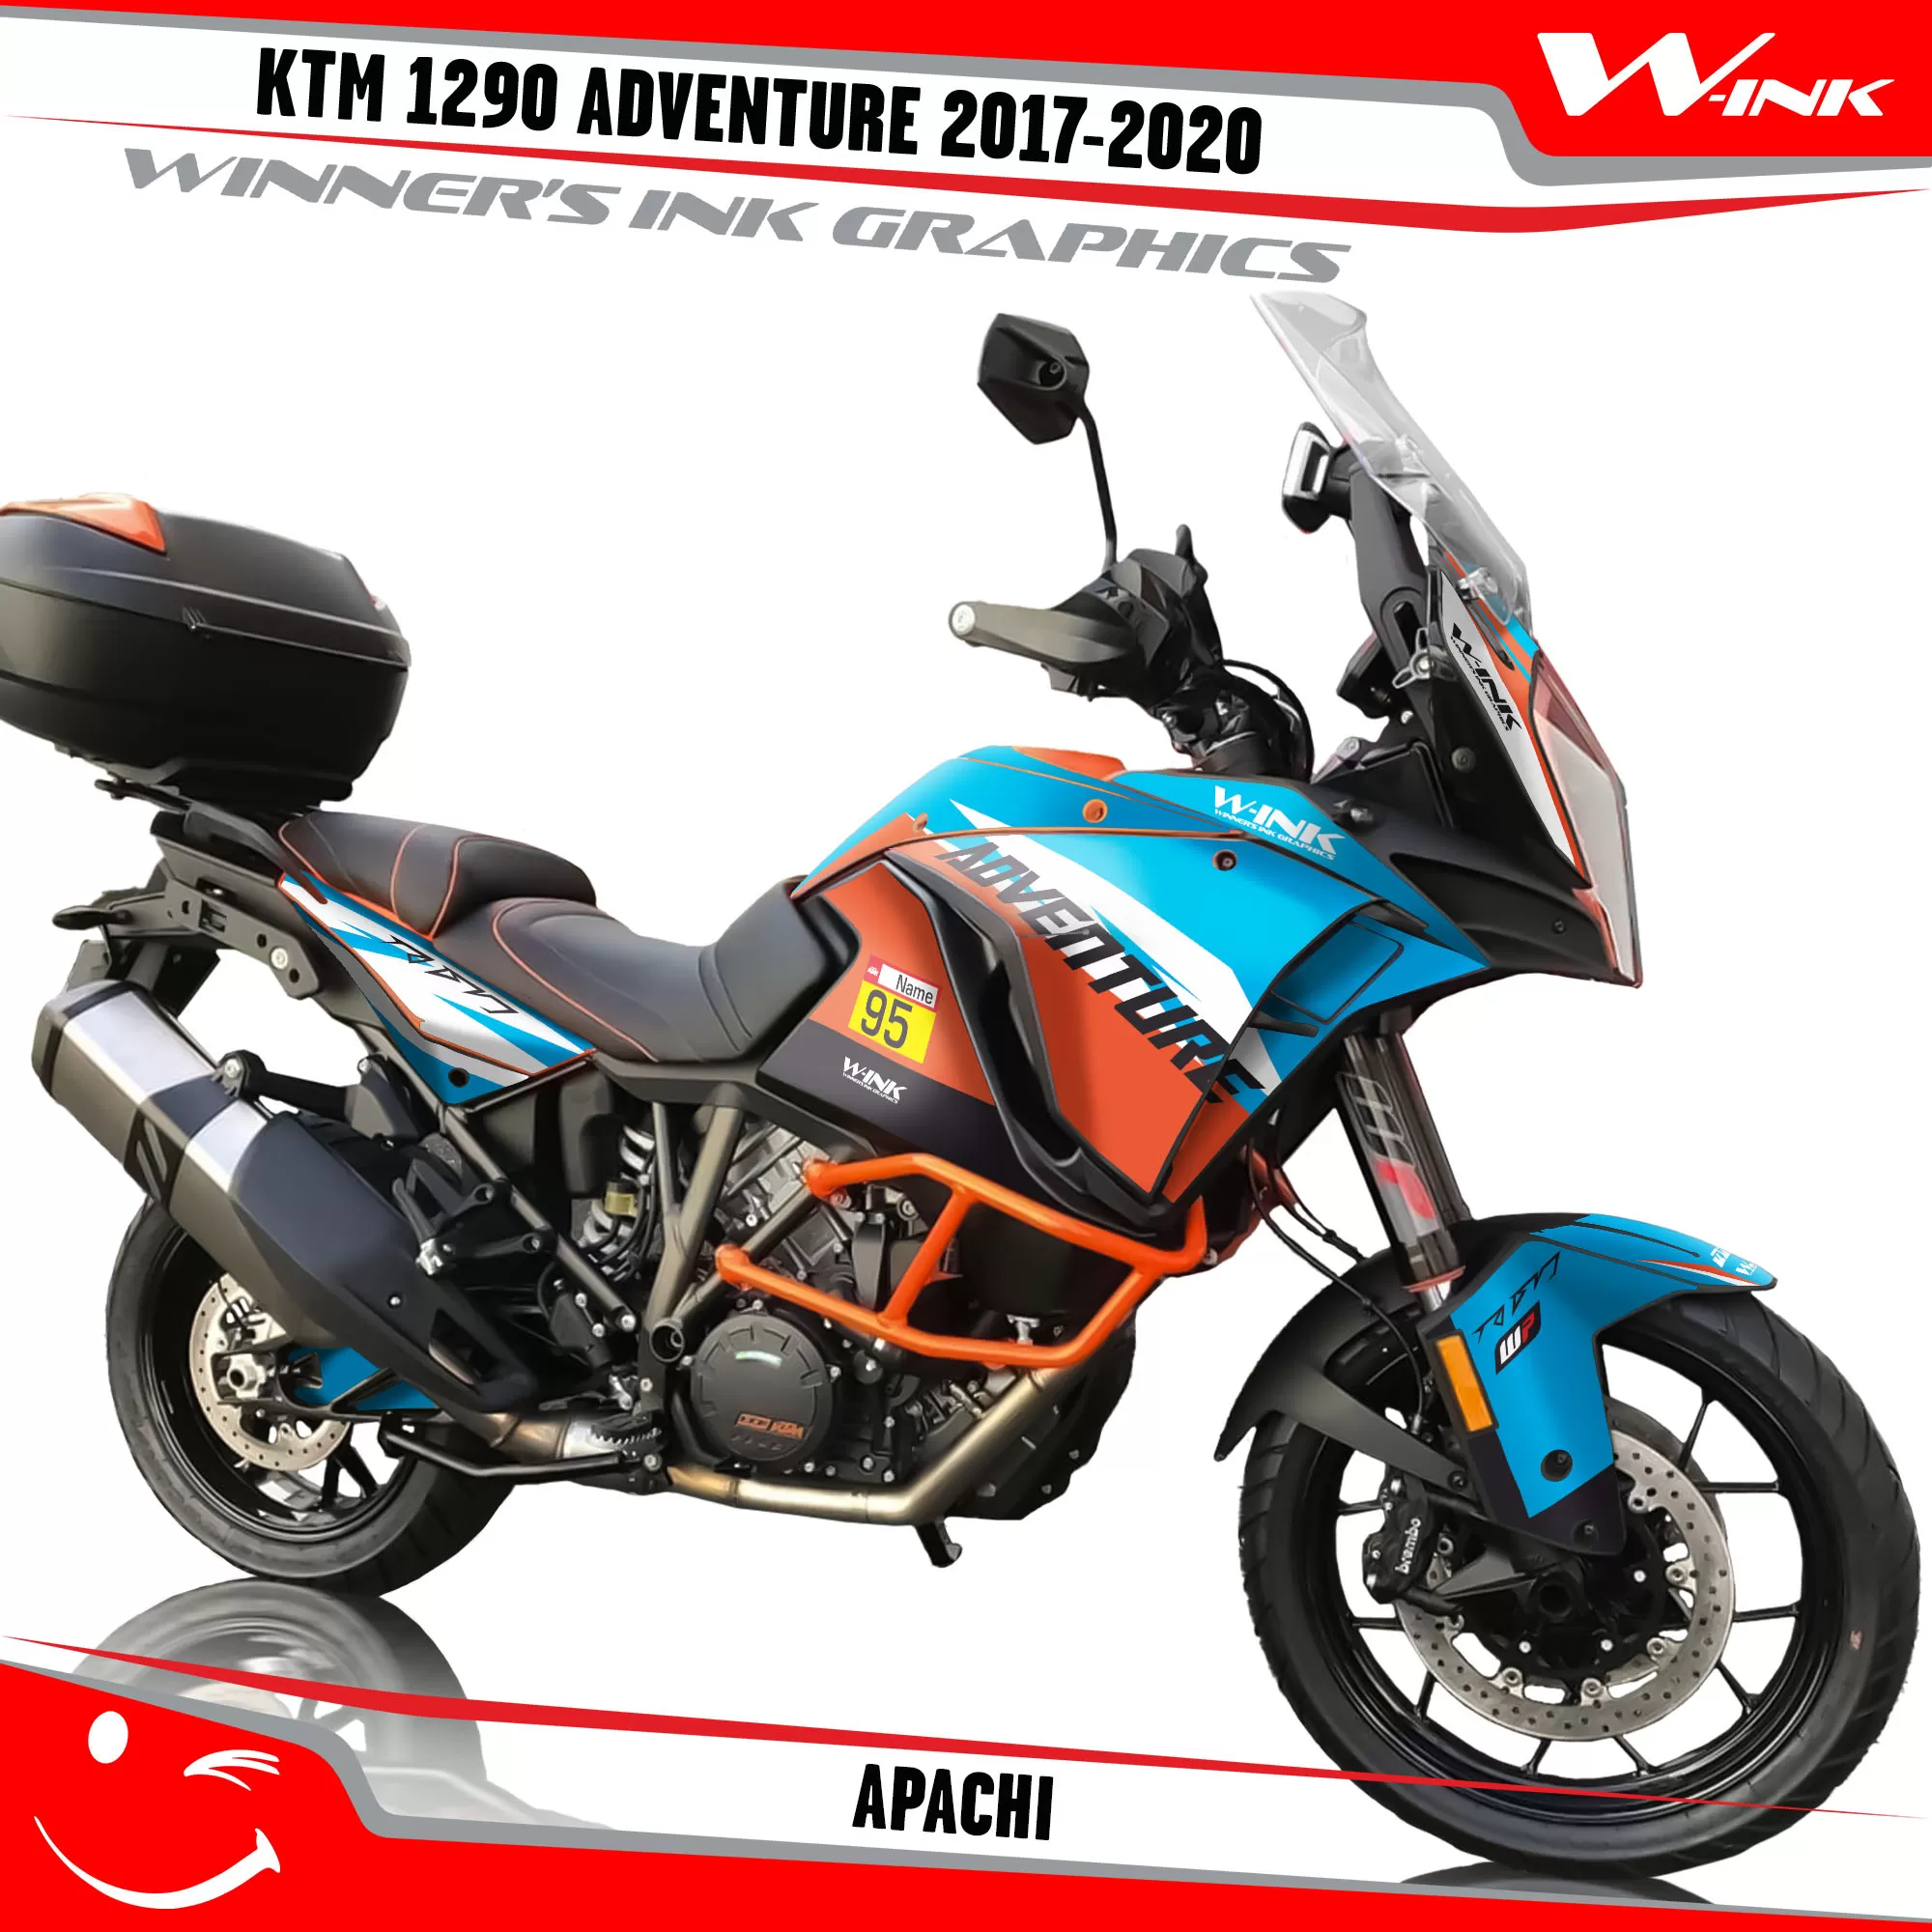 KTM-Adventure-1290-2017-2018-2019-2020-graphics-kit-and-decals-Apachi